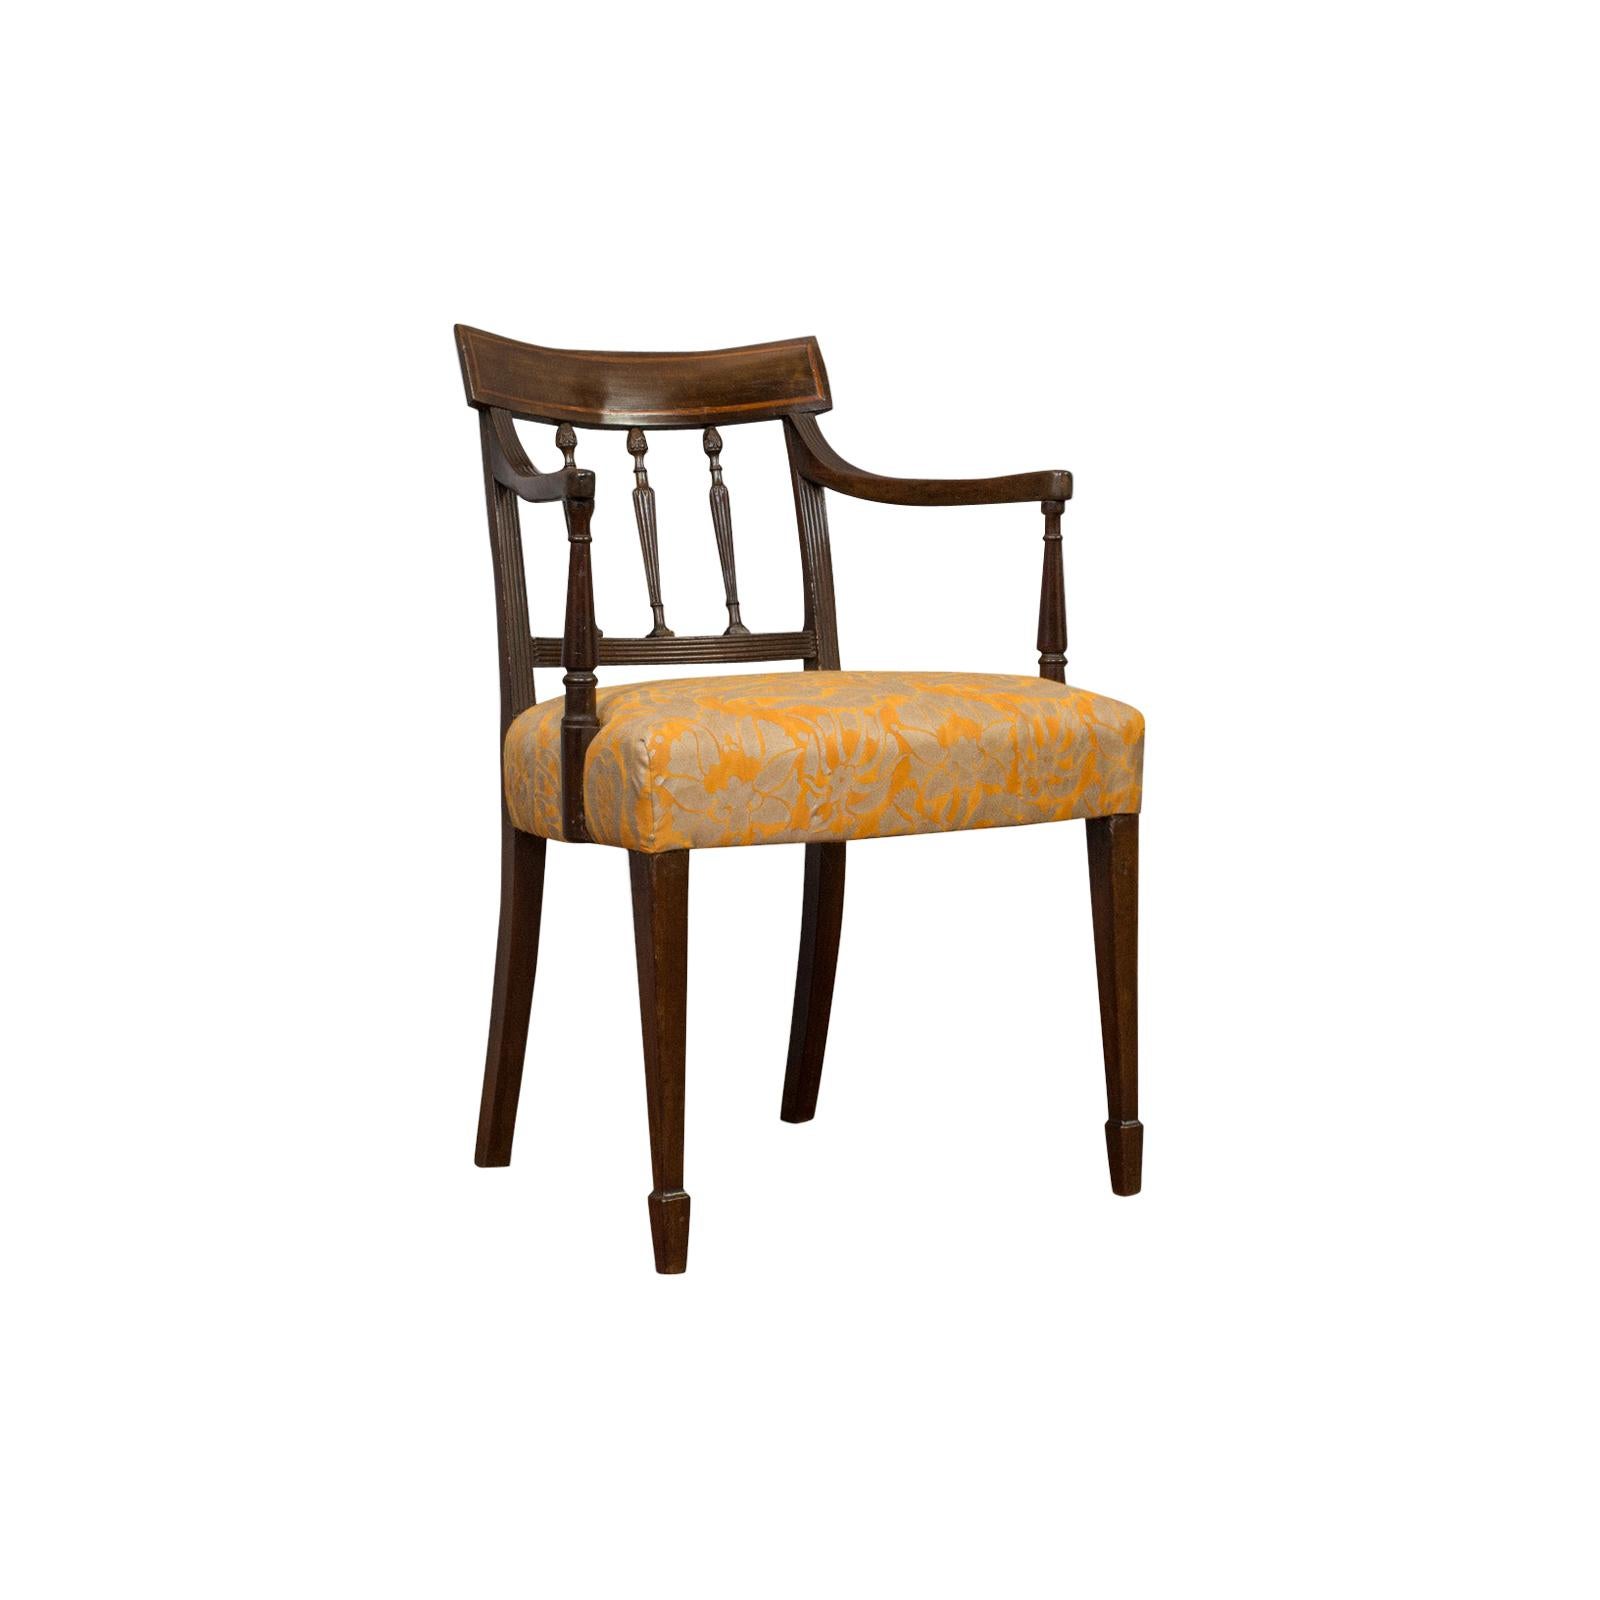 Antique Elbow Chair, English, Mahogany, Armchair, Sheraton Overtones, Regency